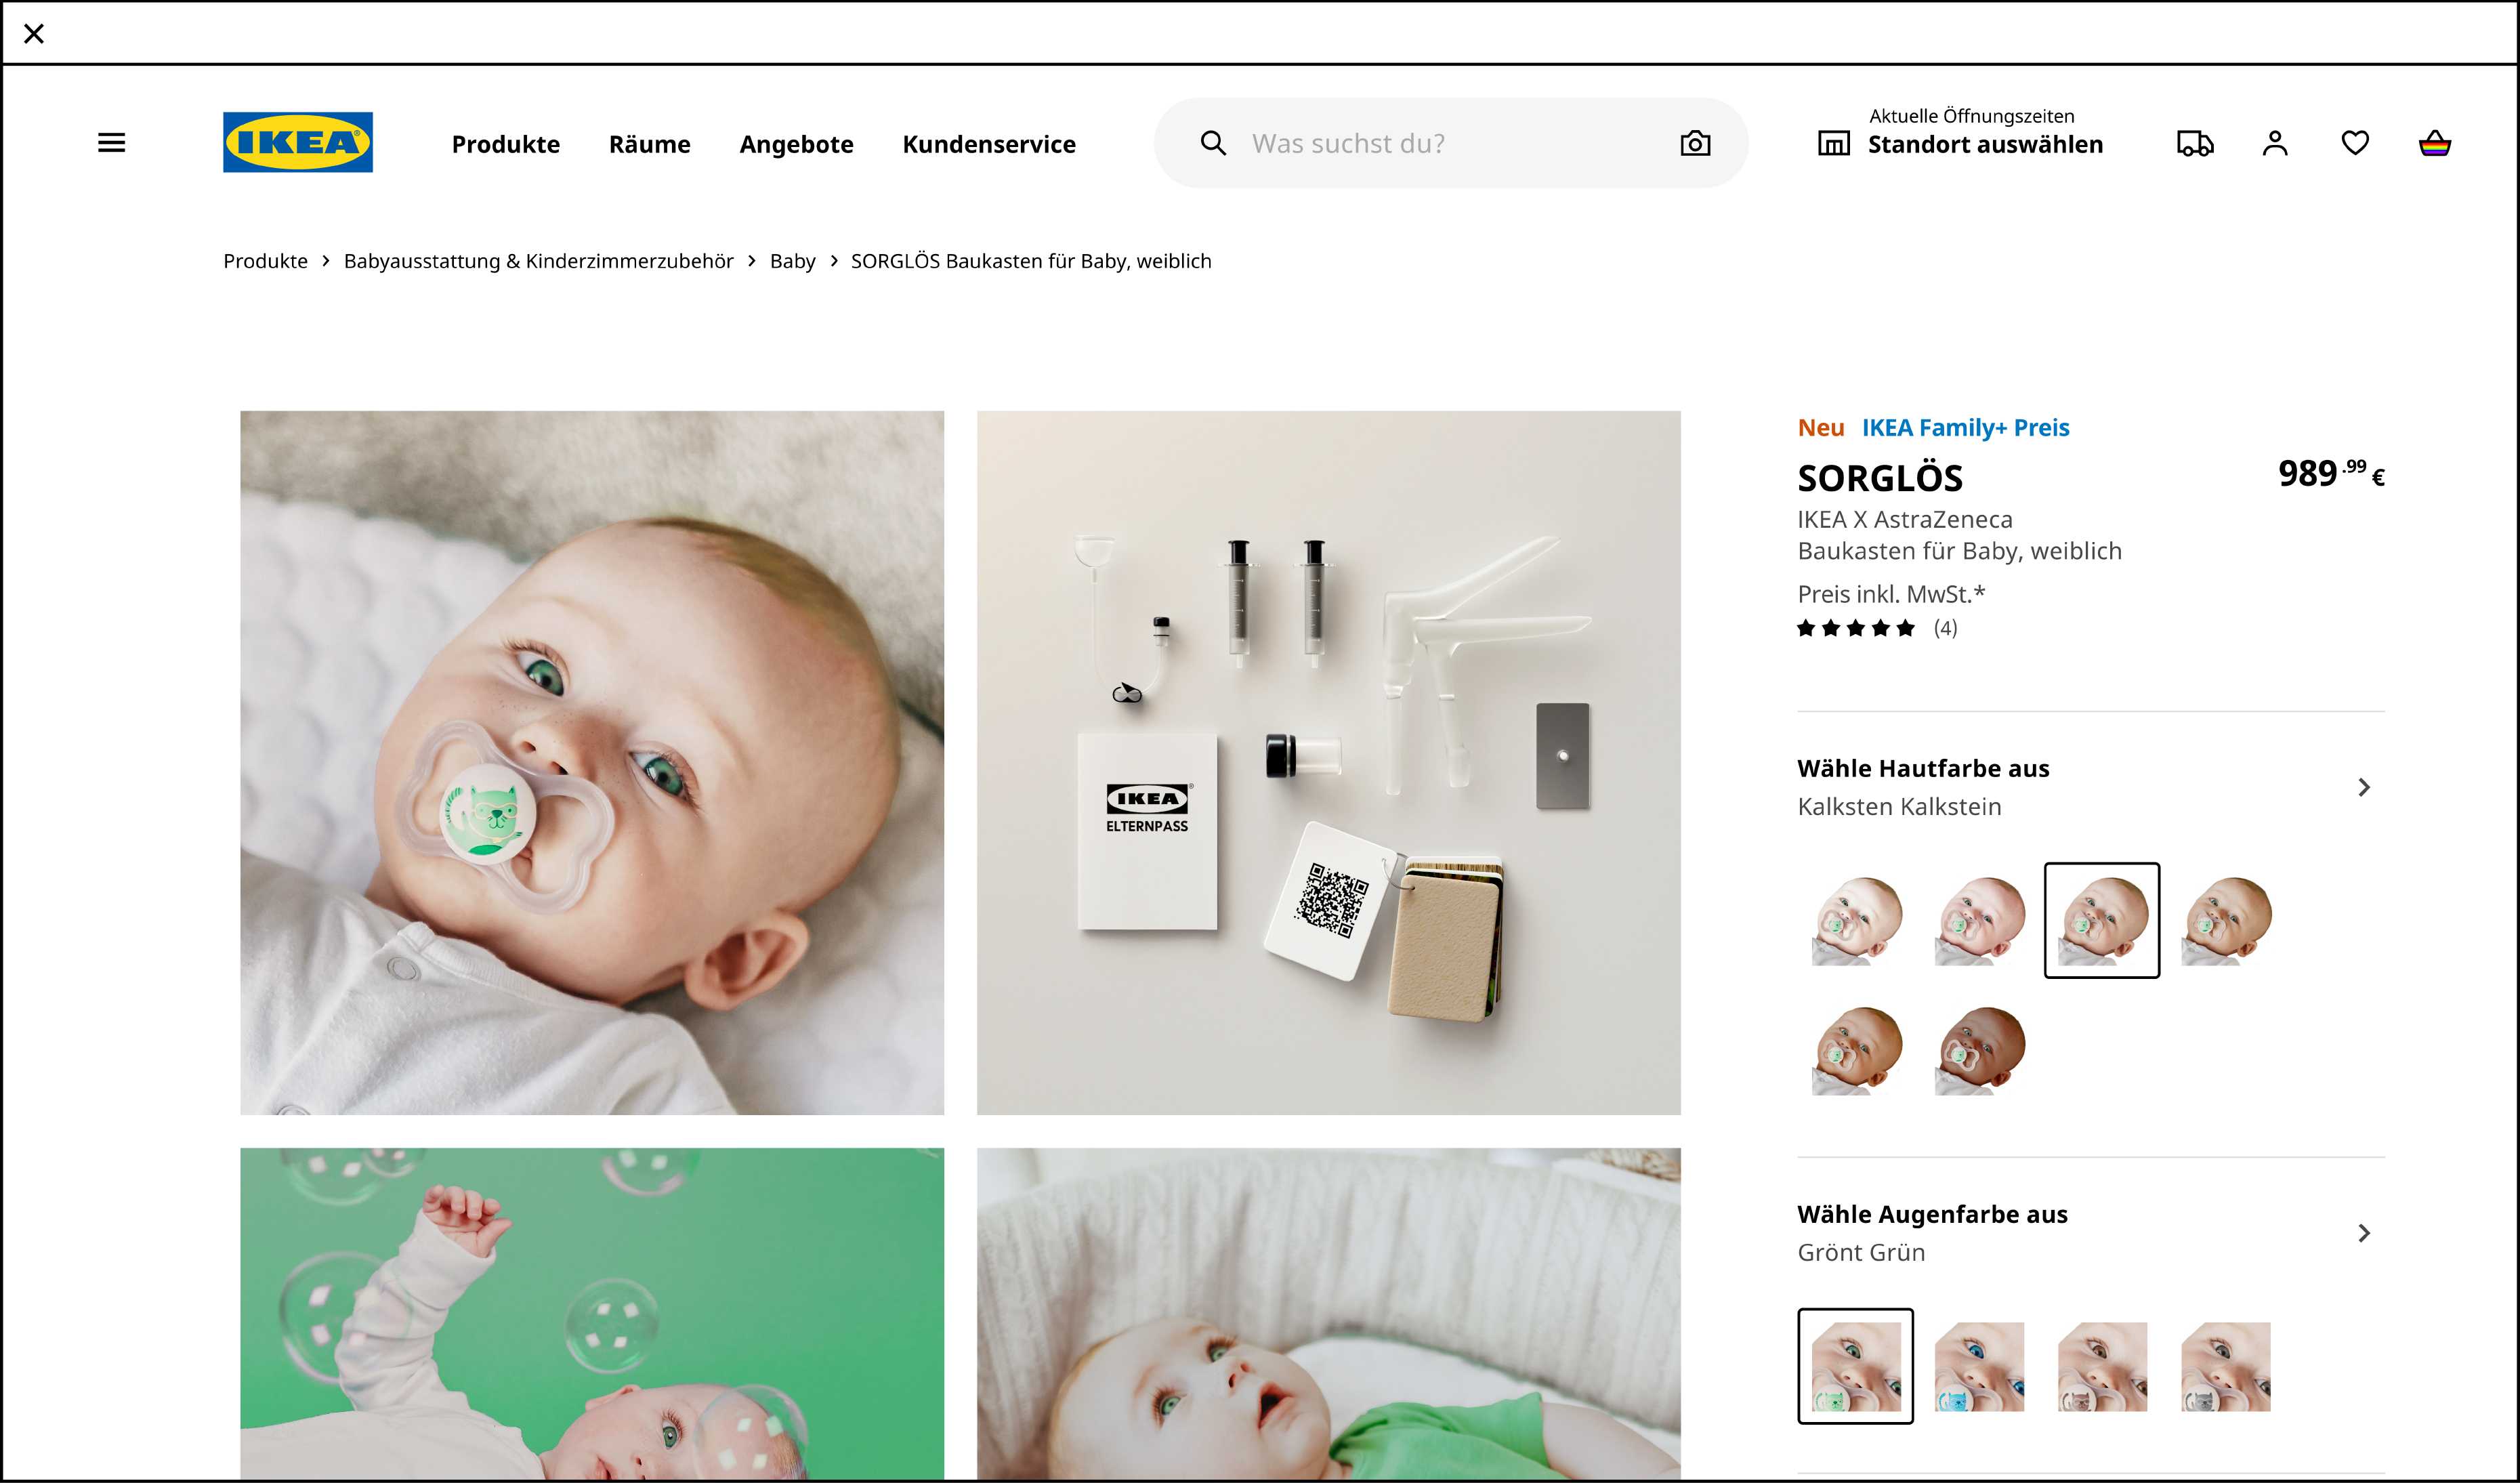 IKEA X AstraZeneca: Website product overview